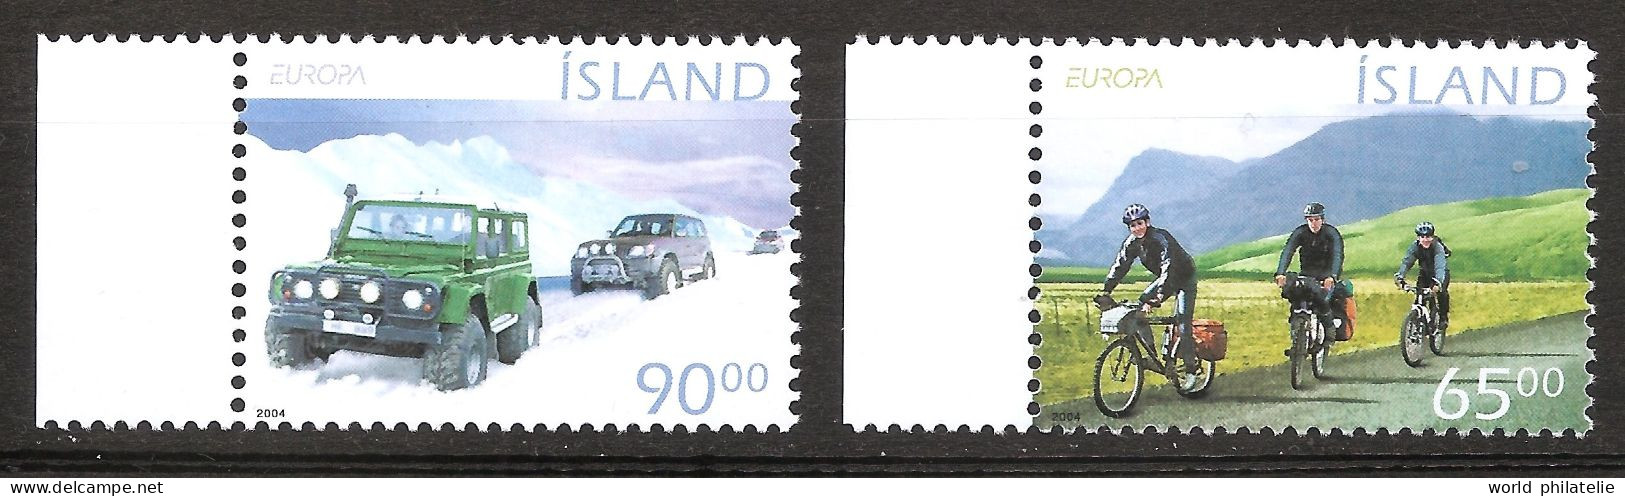 Islande Island 2004 N° 994 / 5 ** Europa, Vacances, Vélo, Jeep, Glaciers, Cyclisme, Route, Tourisme, 4x4, Neige Montagne - Unused Stamps